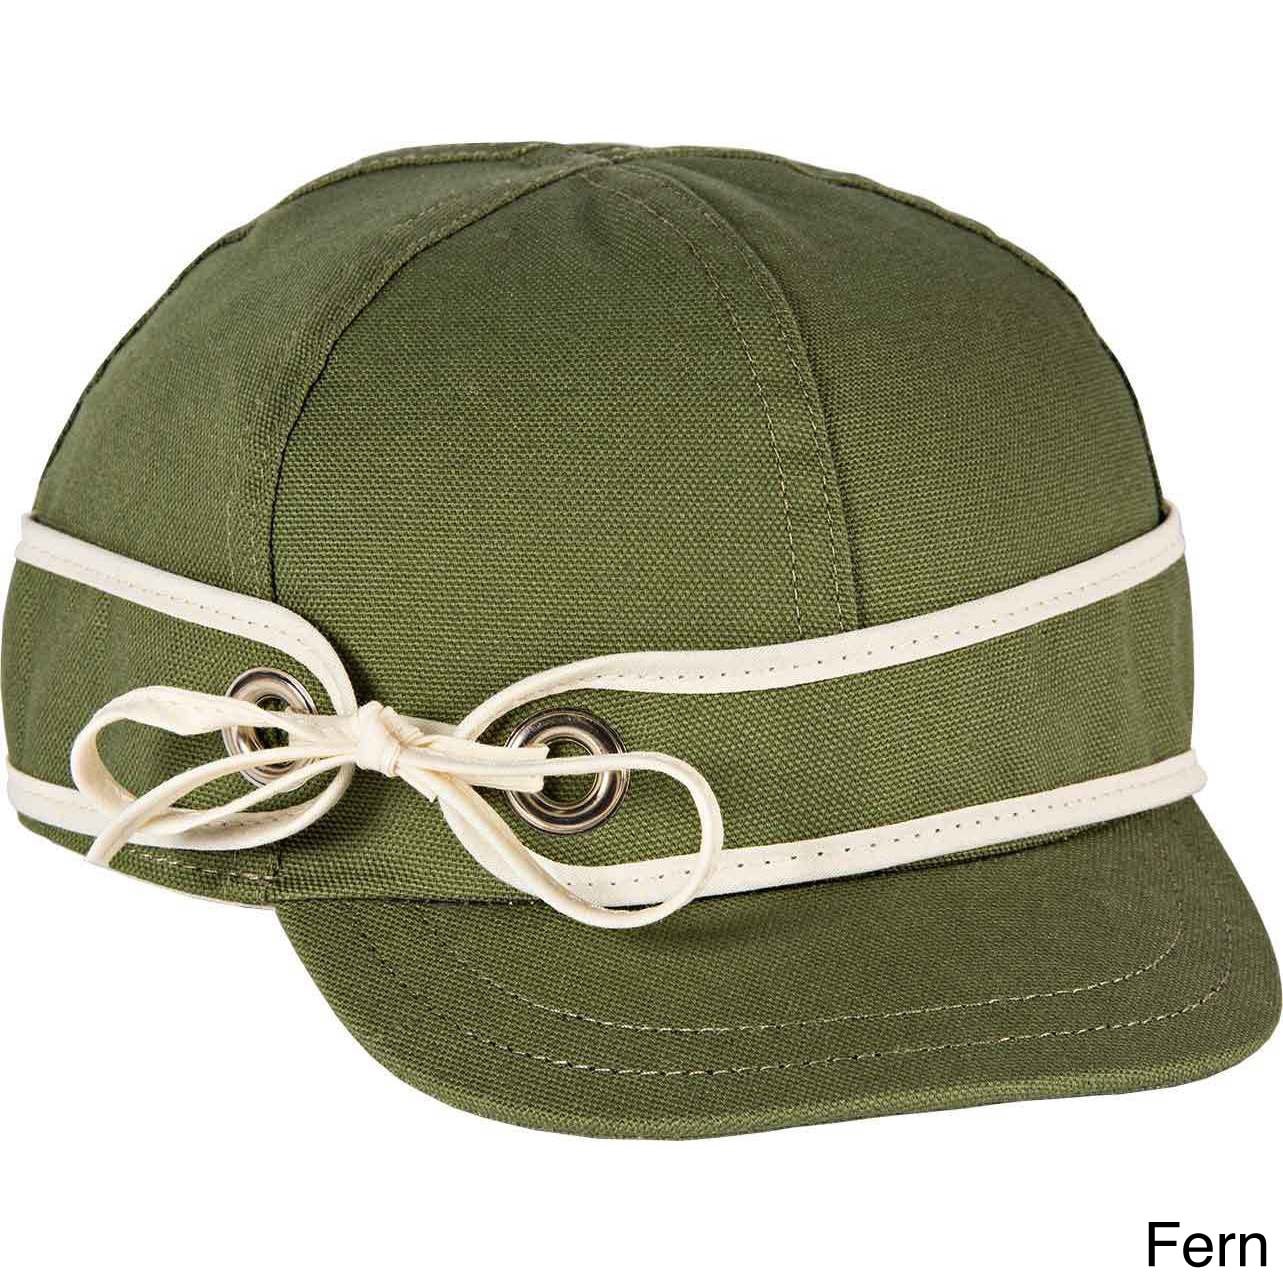 Stormy Kromer Stormy Kromer Idas Infielder Cotton Twill Hat Green Size One Size Fits Most